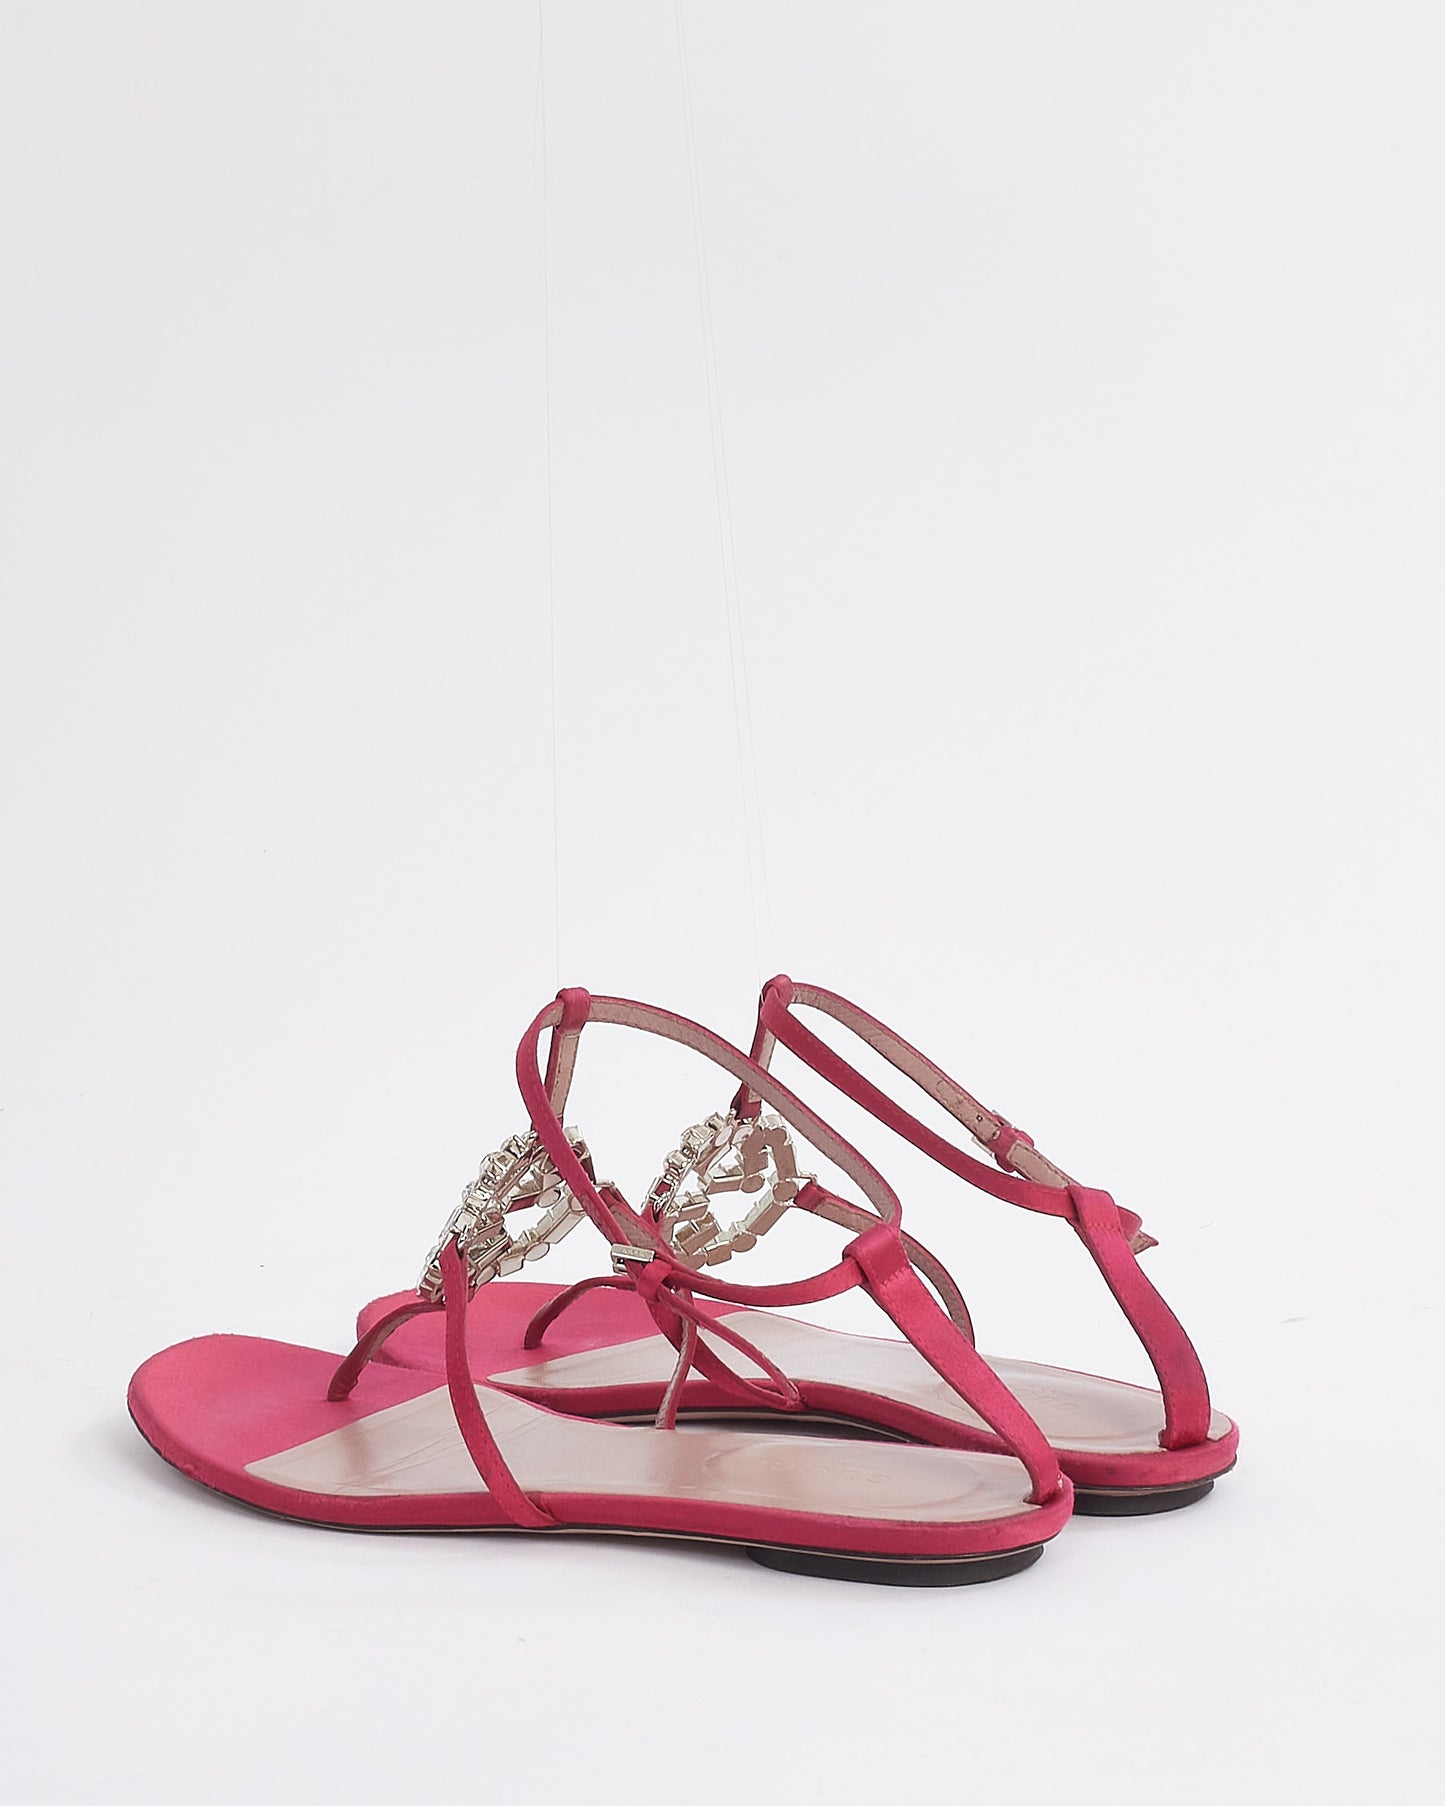 Gucci Fuchsia Satin GG Crystal Sandals - 37.5